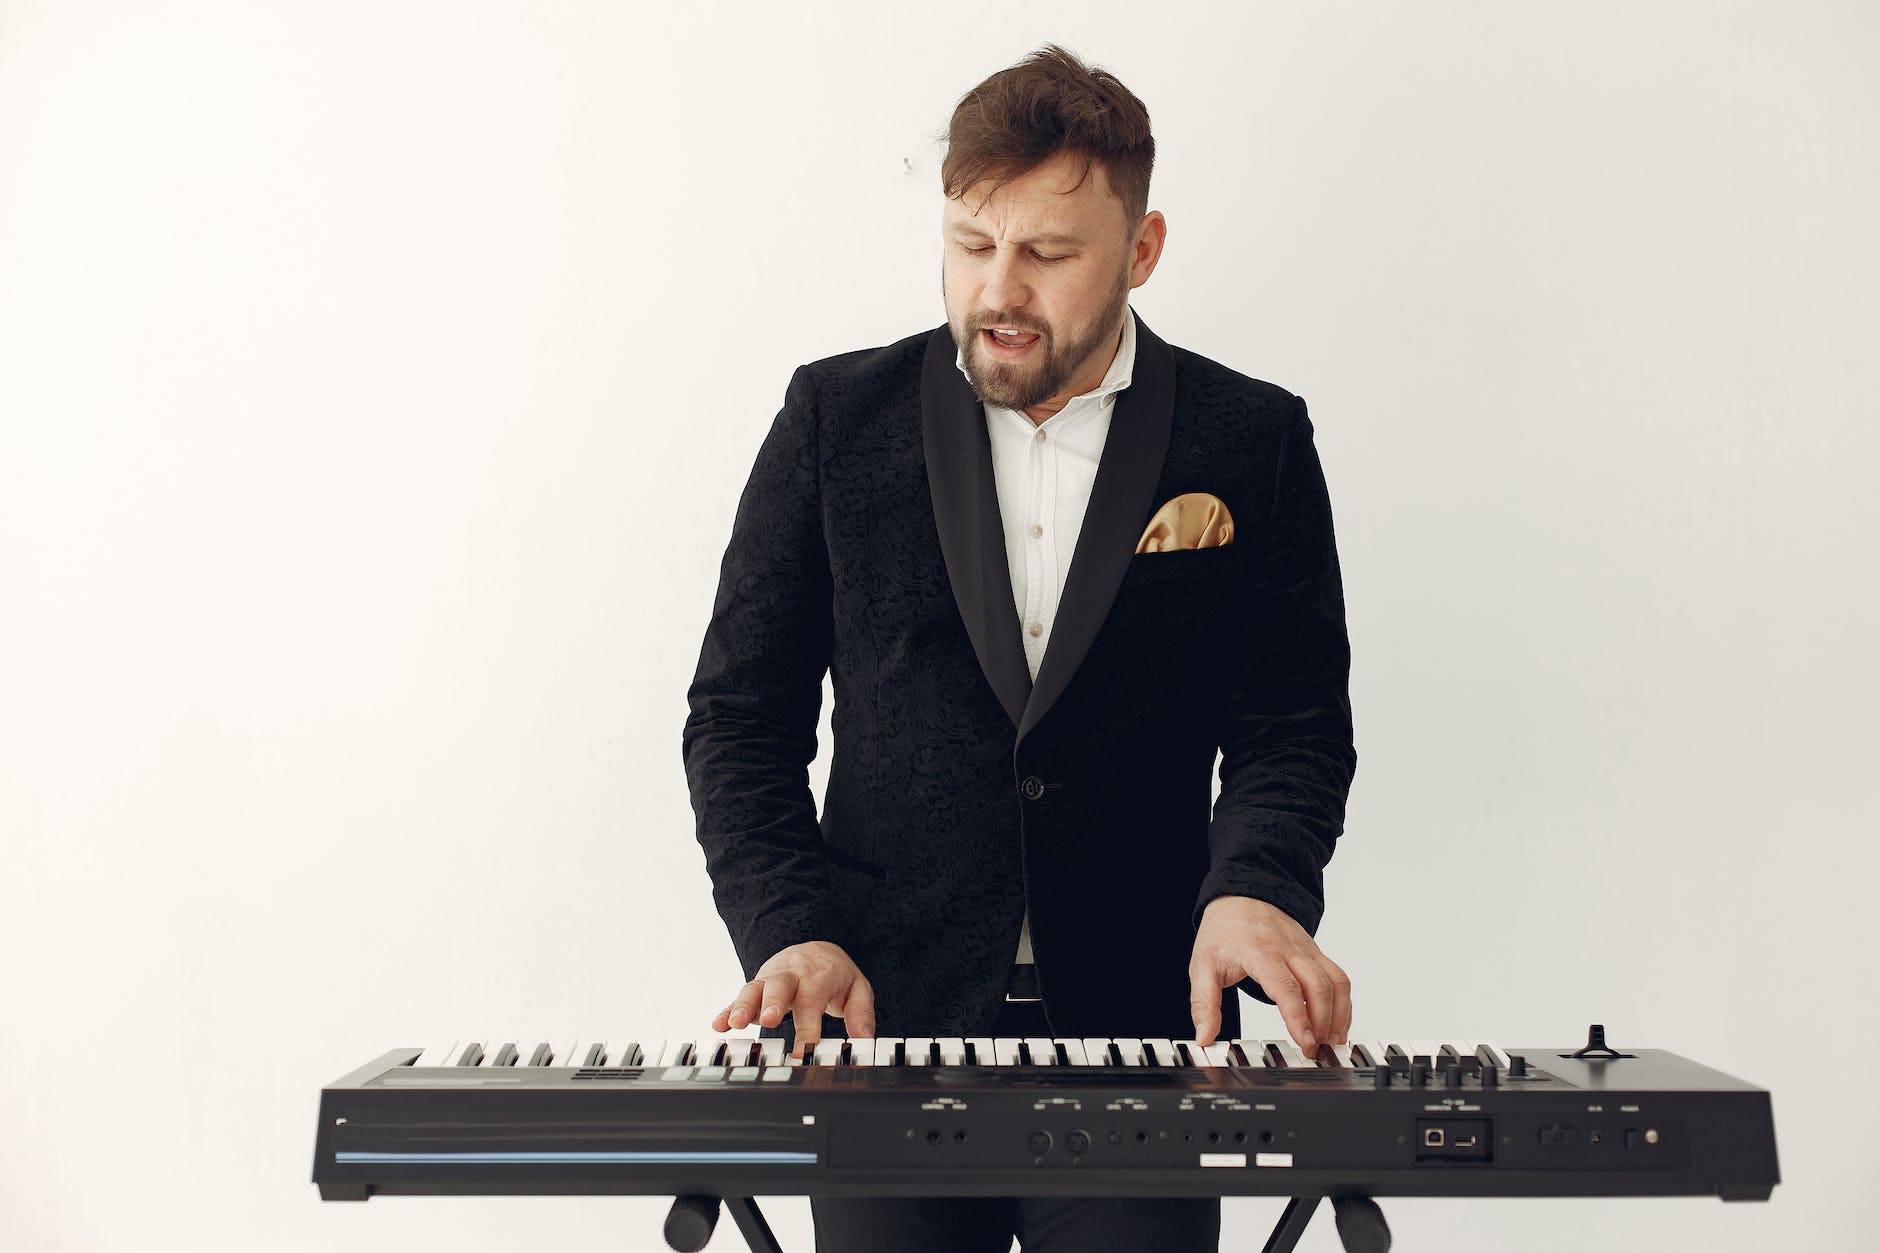 stylish adult bearded man singing and playing synthesizer